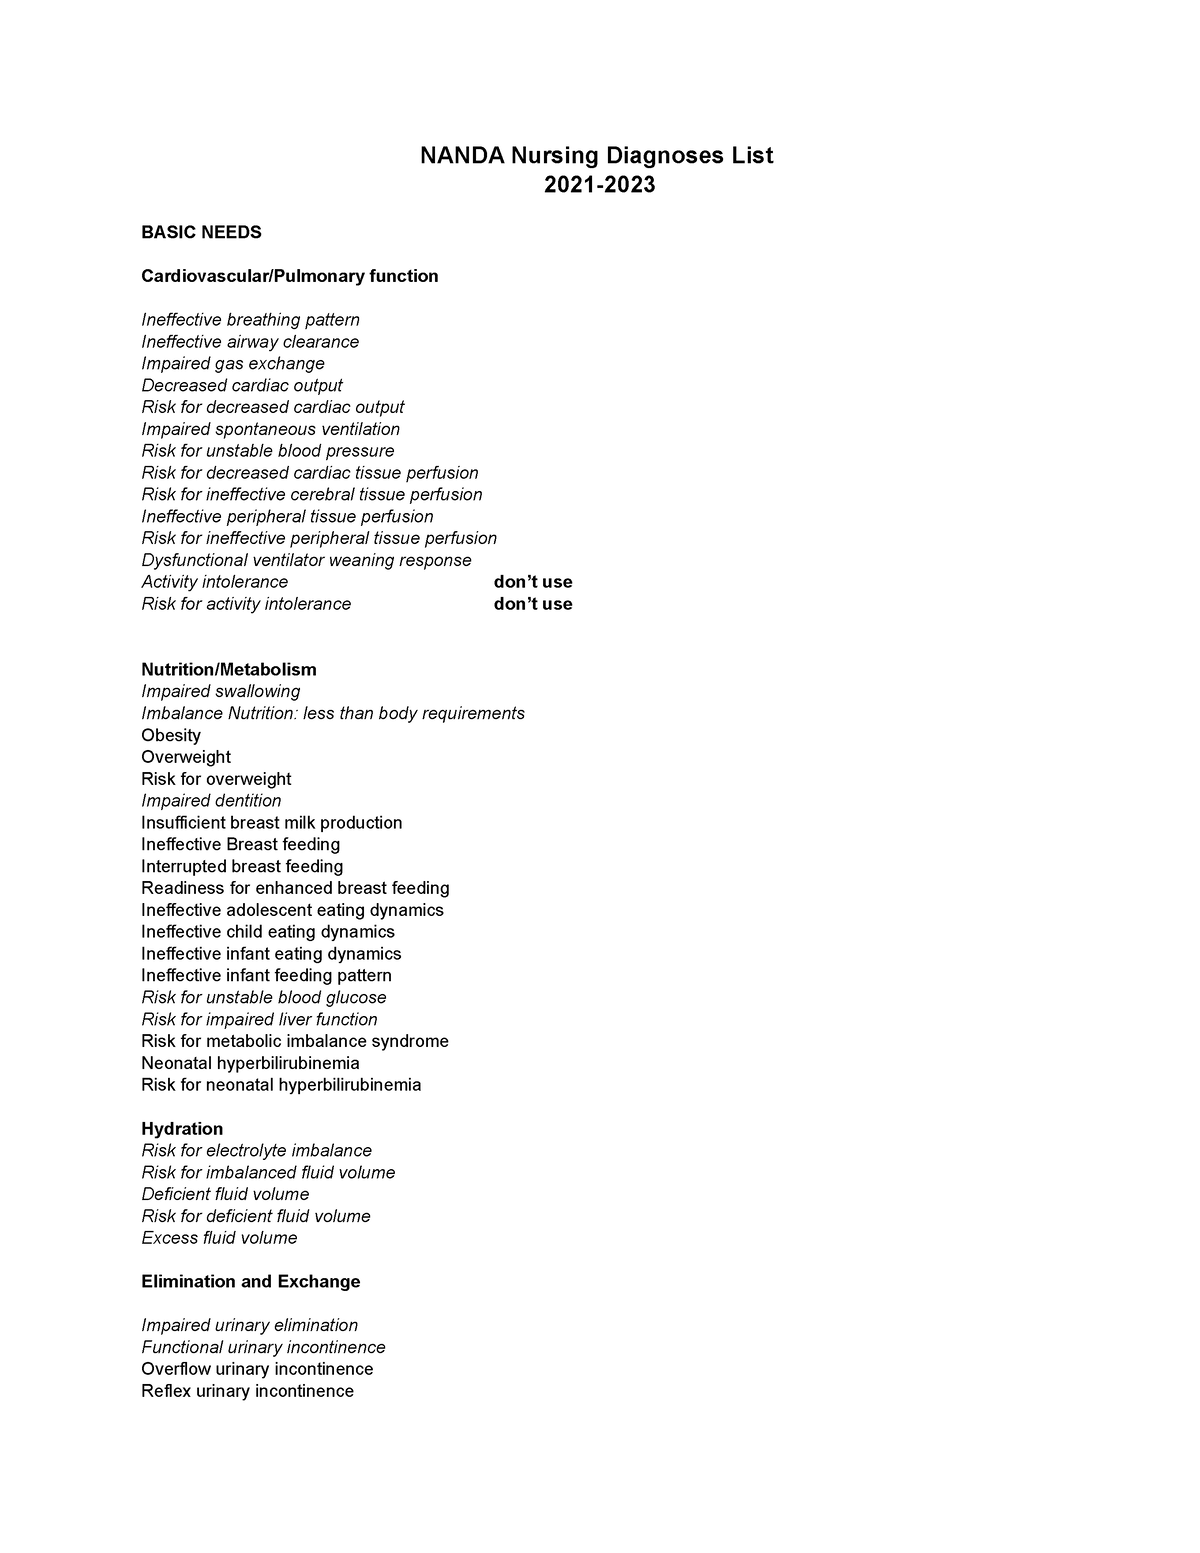 nanda-nursing-diagnoses-list-2021-2023-nanda-nursing-diagnoses-list